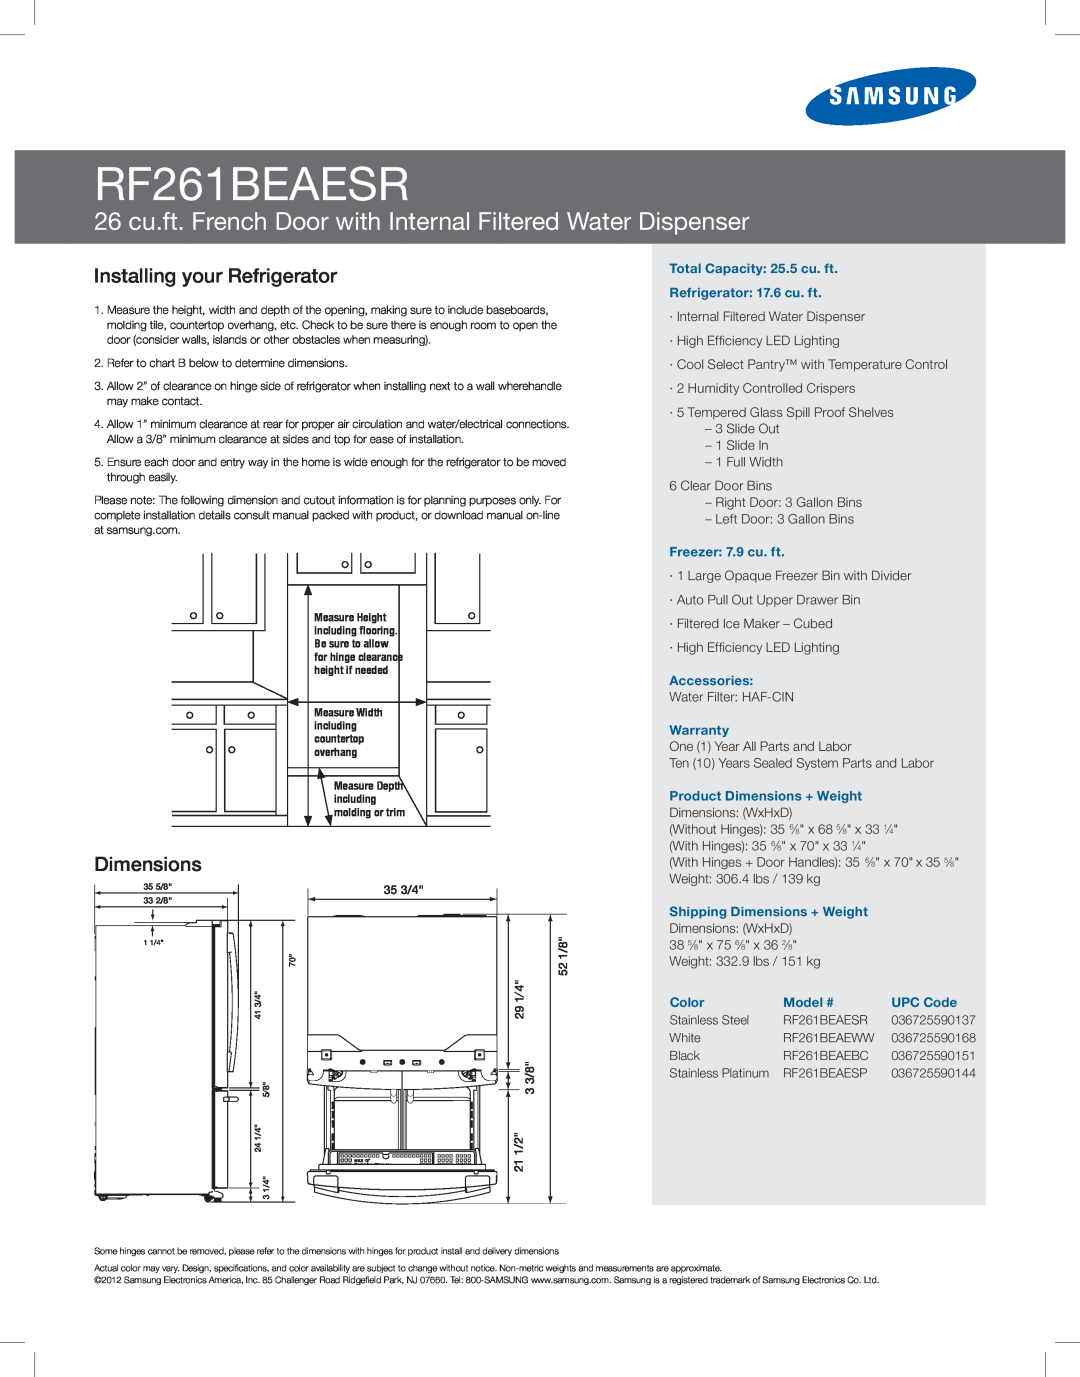 Samsung RF261BEAESR manual Installing your Refrigerator, Dimensions 